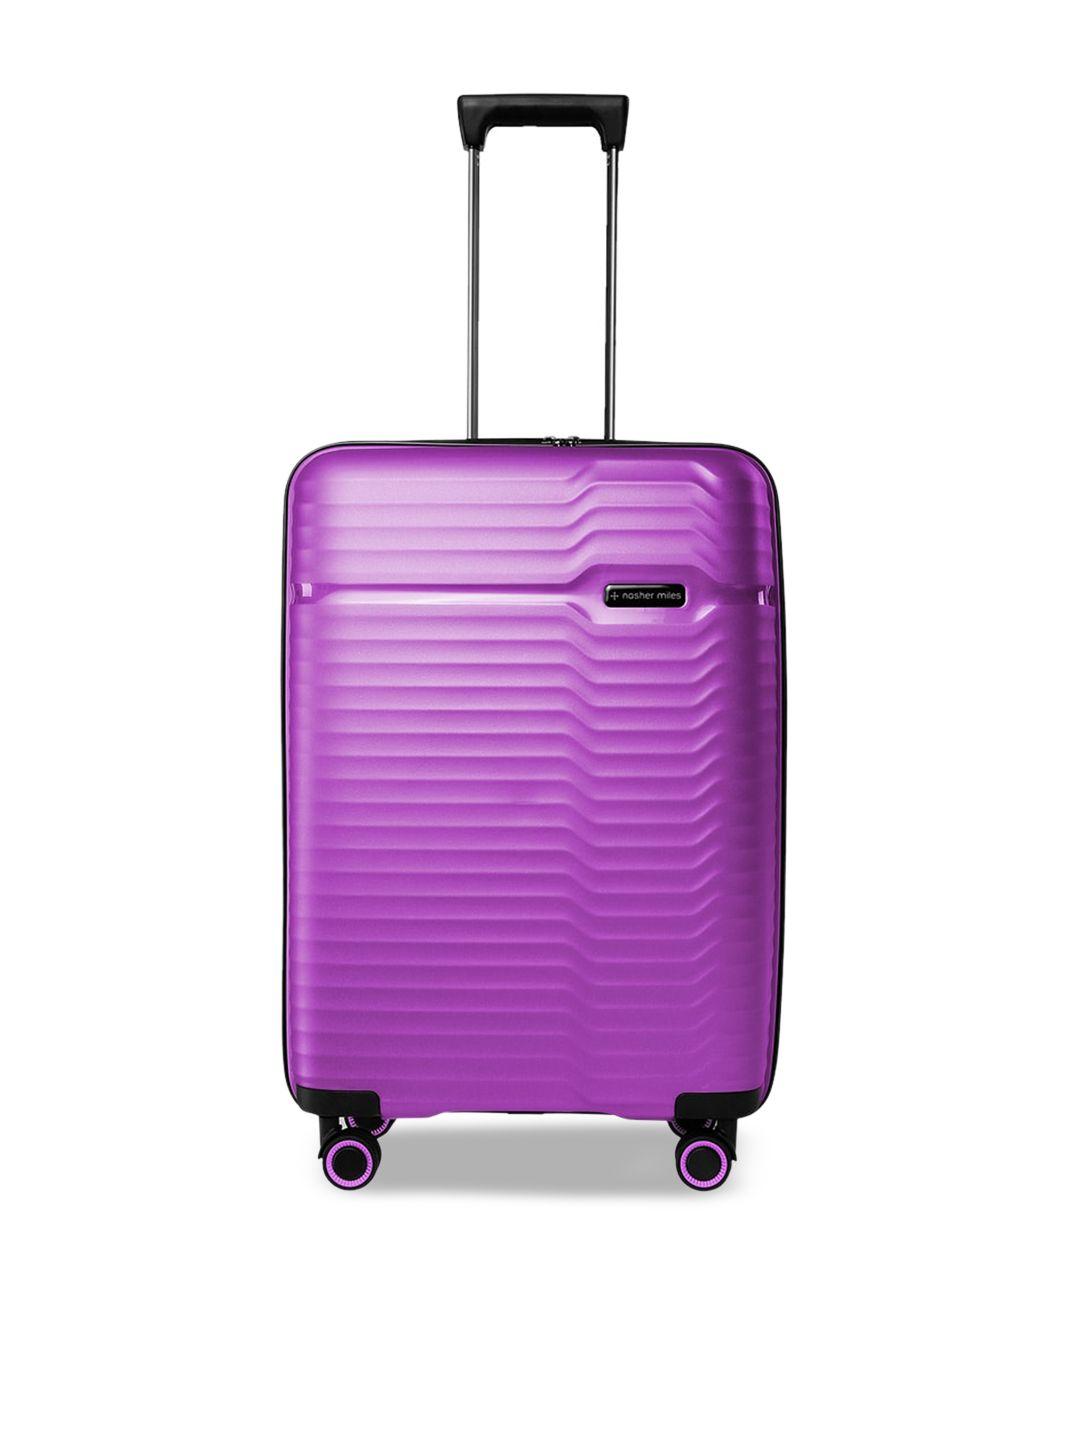 nasher miles purple hard-sided luggage trolley bag